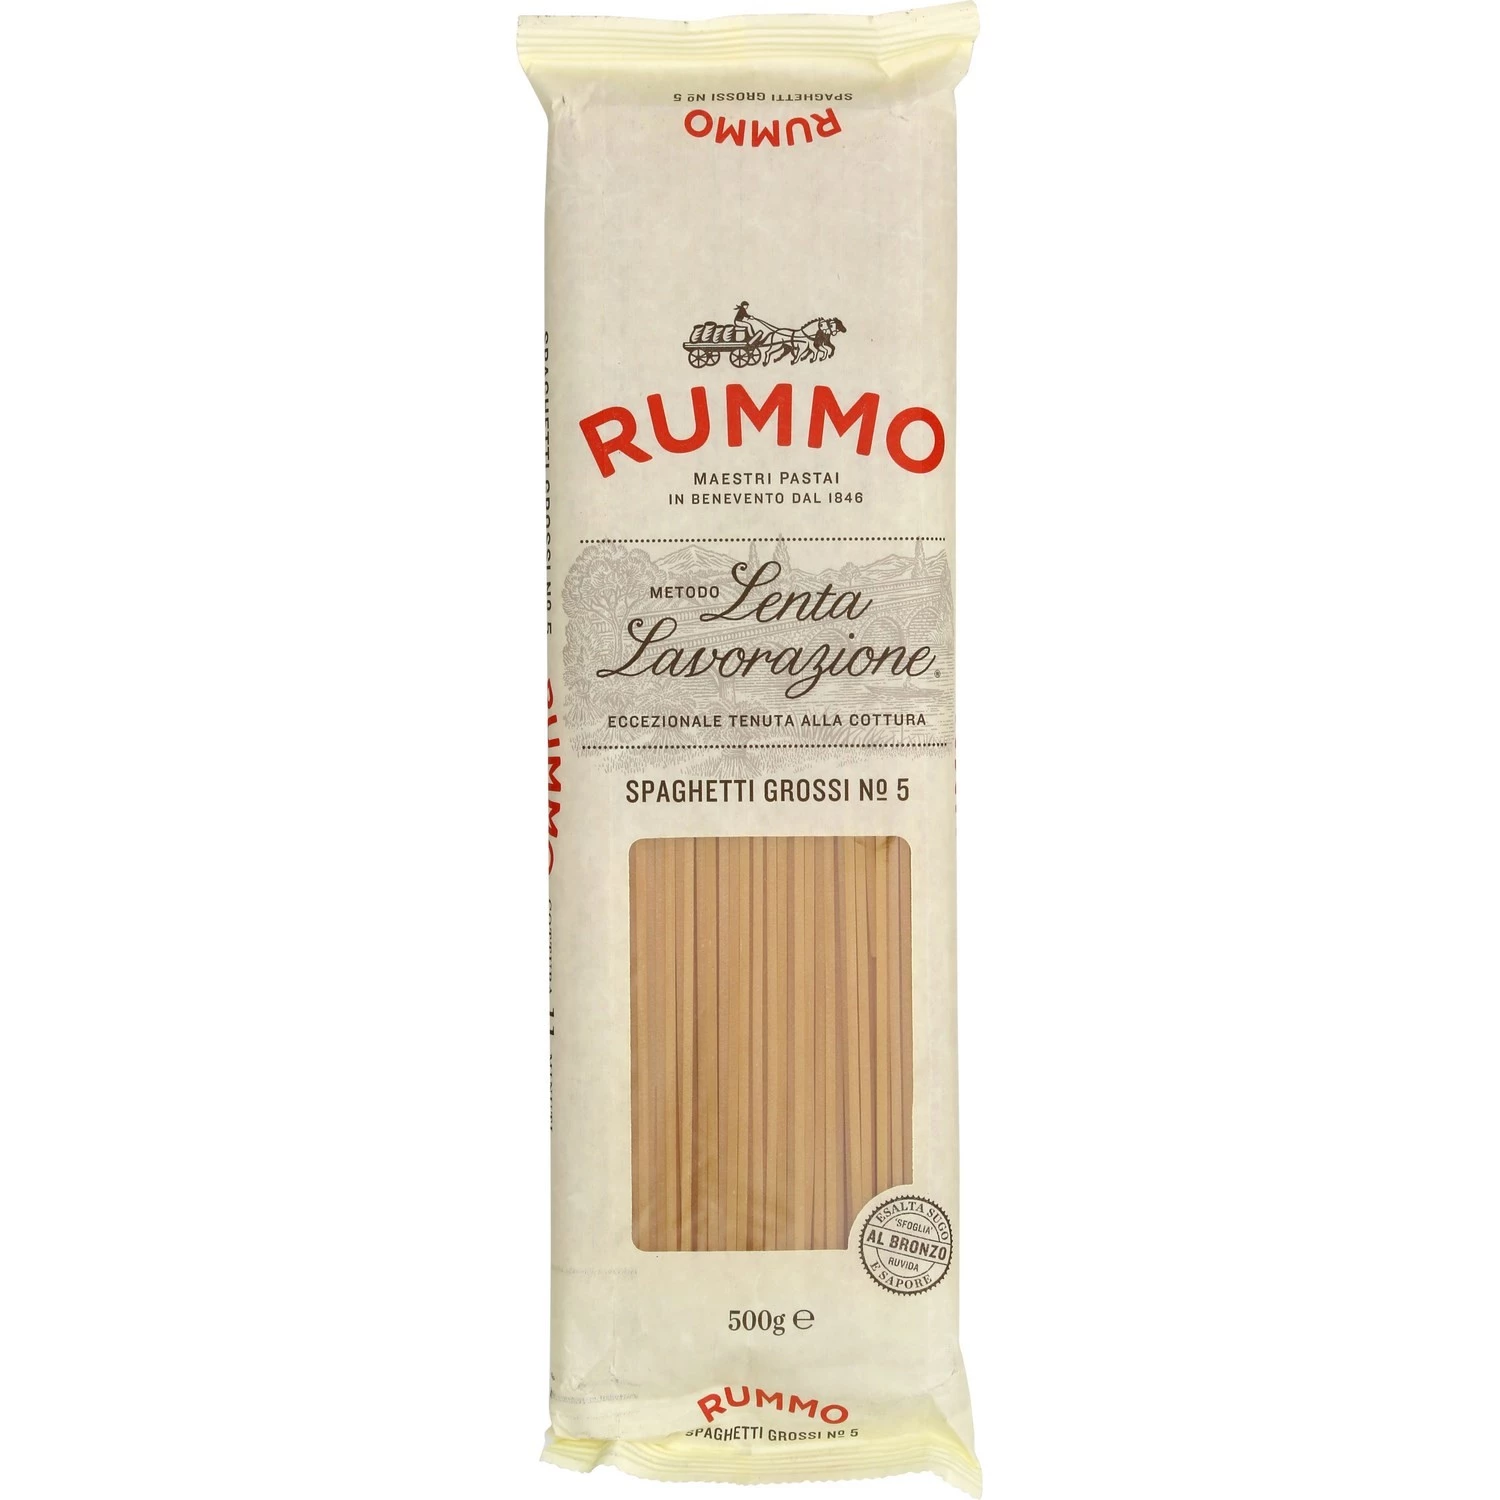 Spaghetti pasta gross n°5 500g - RUMMO